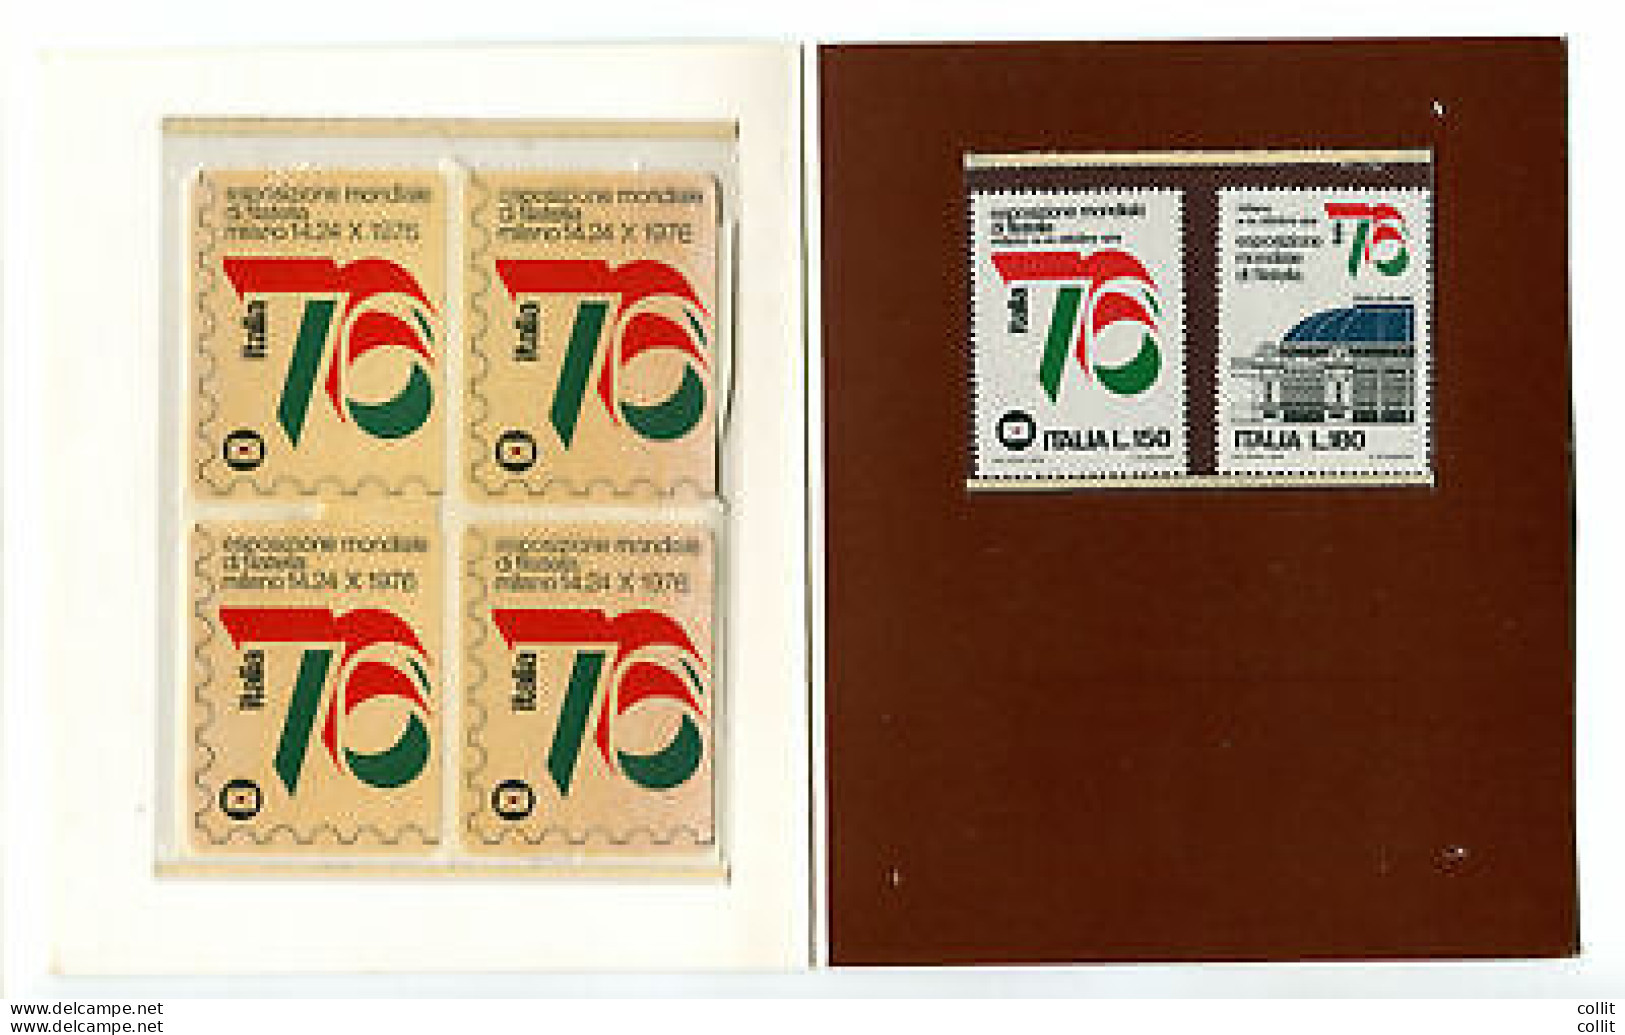 Precursore 1976 - Folder Dedicato Ala Manifestazione Italia '76 - Geschenkheftchen